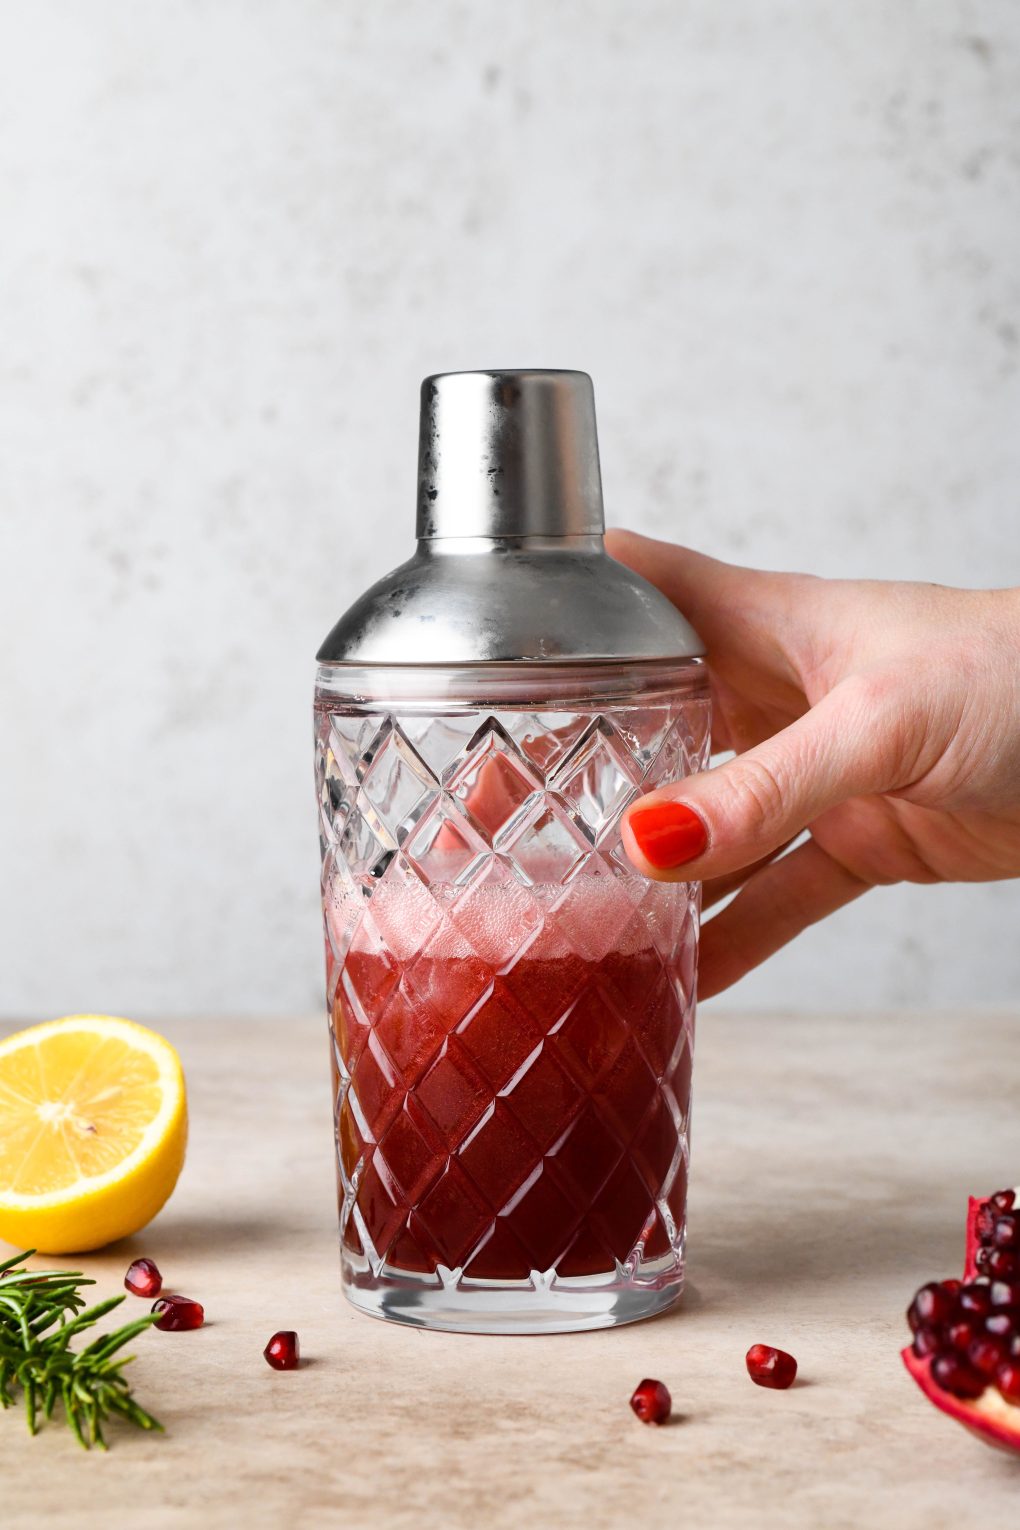 How to make Festive Pomegranate Champagne Cocktail: Cocktail shaken in cocktail shaker.